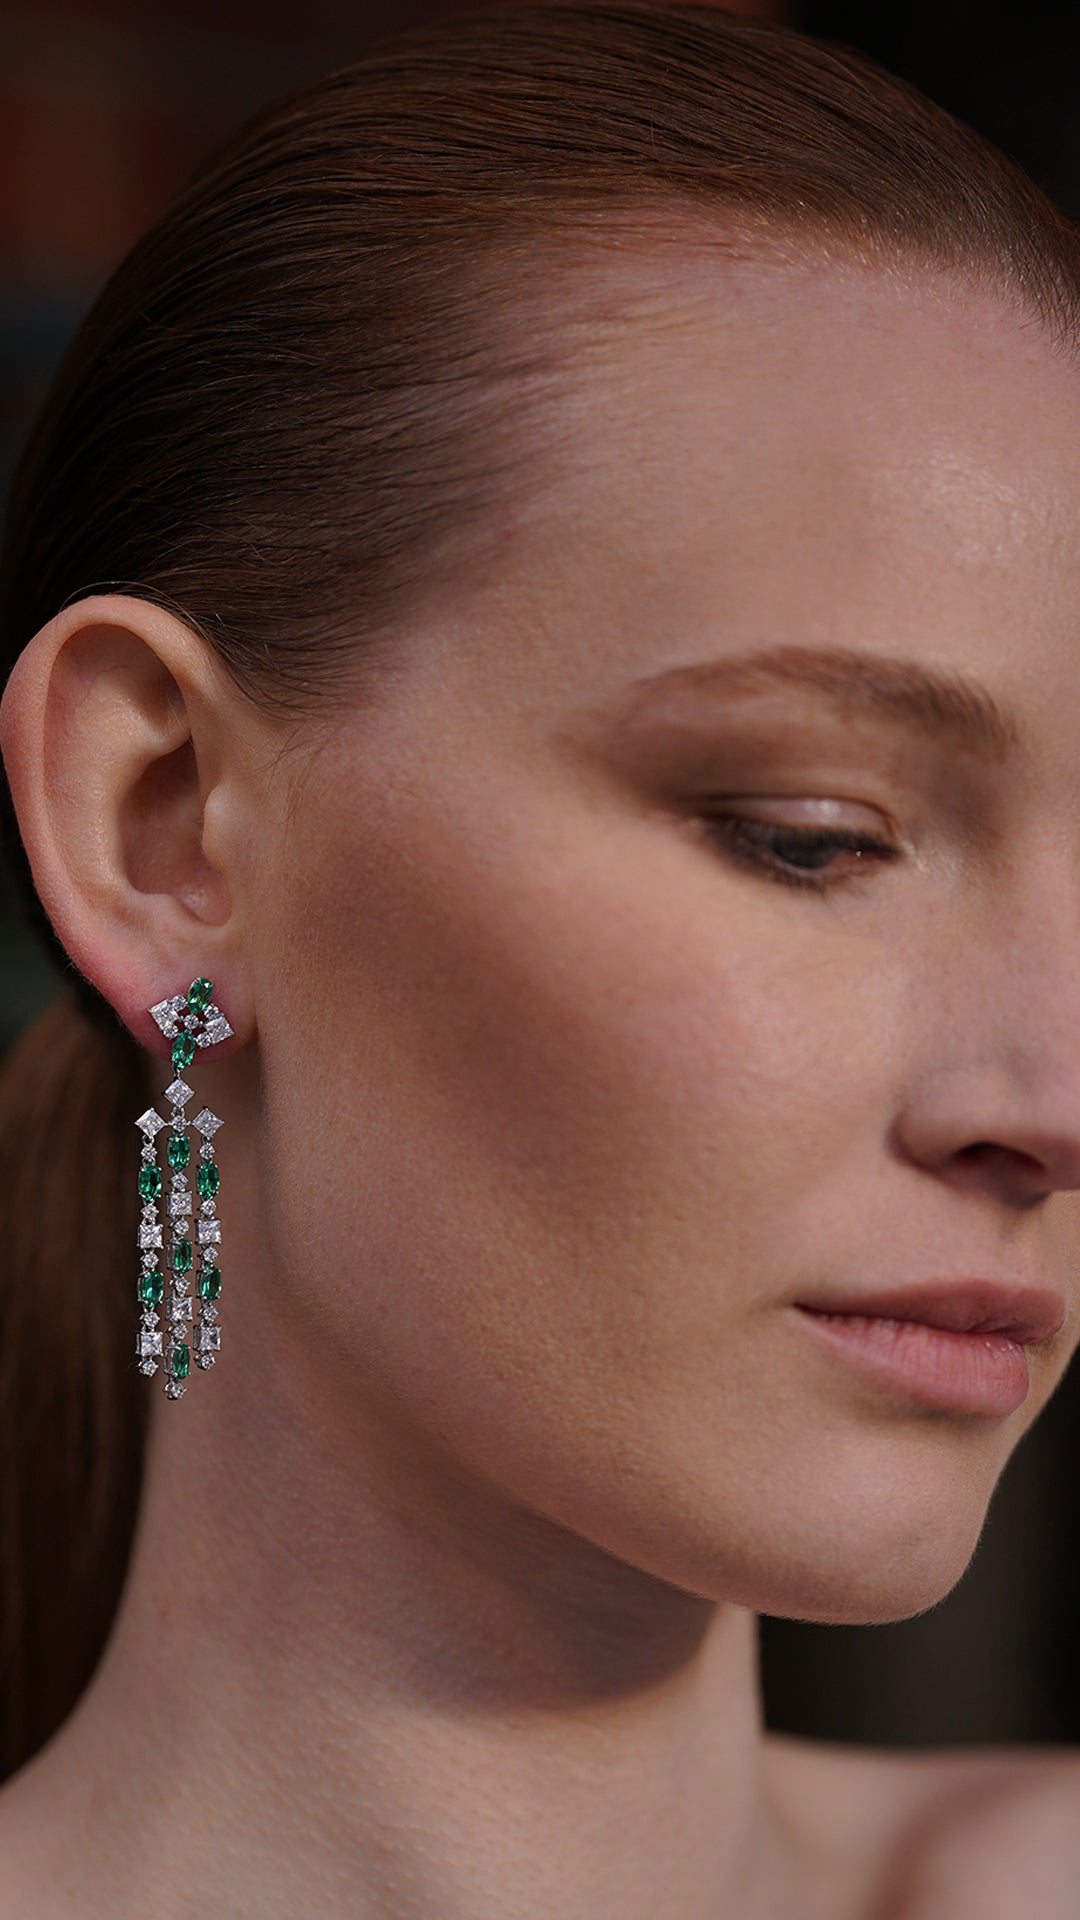 Brady Emerald Earrings White Gold Plated